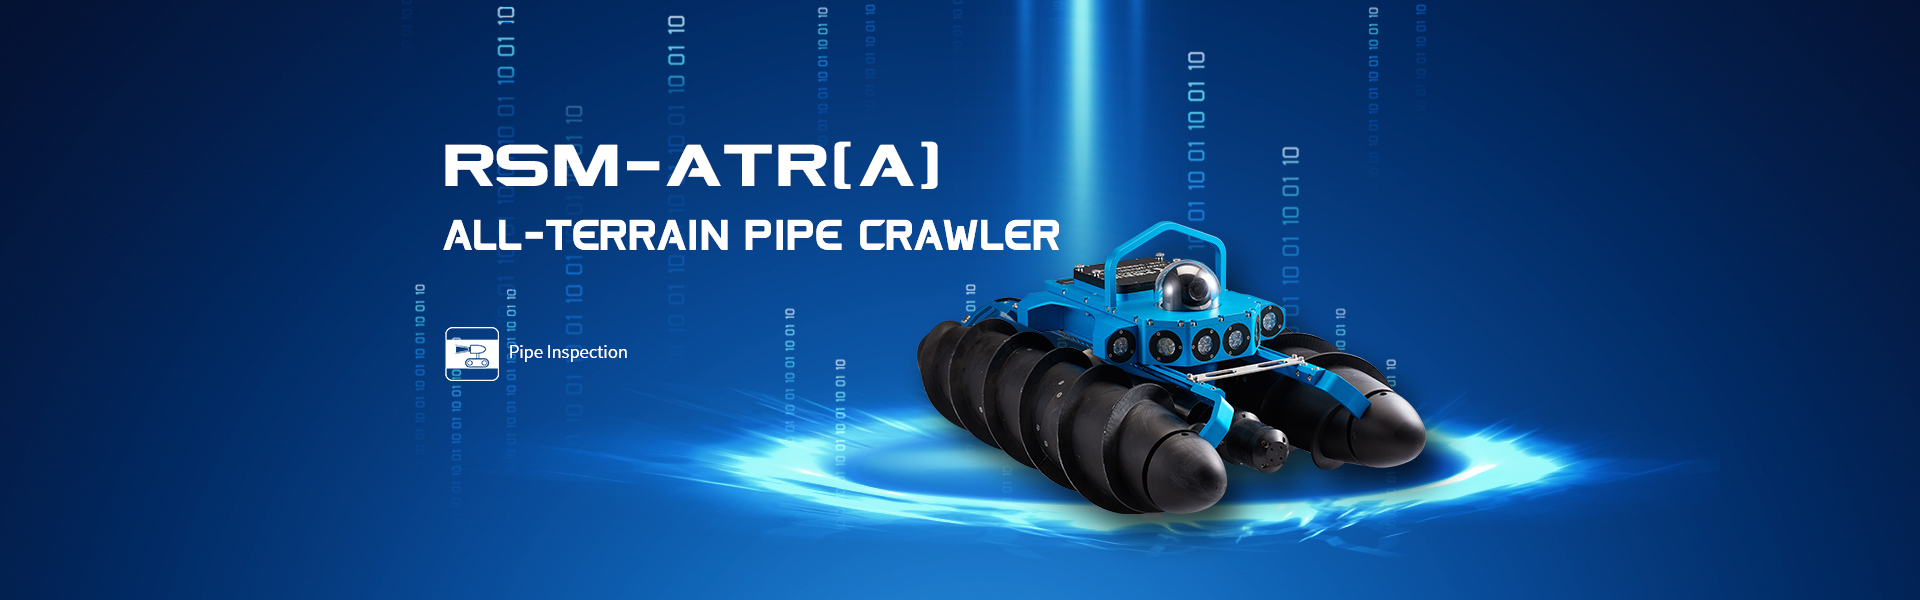 RSM-ATR (A) All-Terrain Pipe Crawler